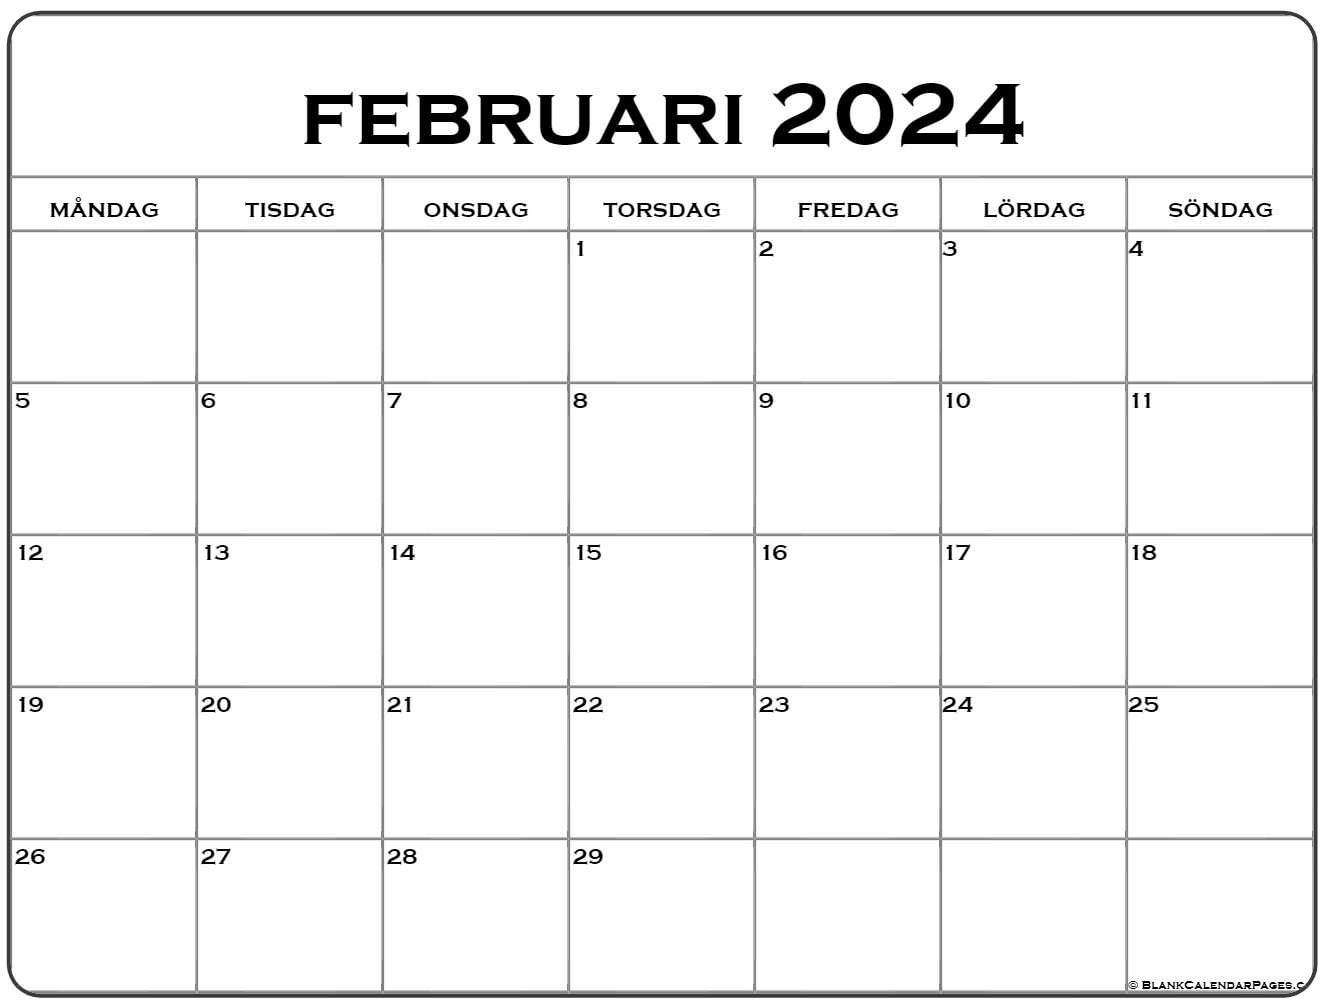 Årskalender Kalender 2021 Skriva Ut Gratis : Januari 2021 Kalender 2021